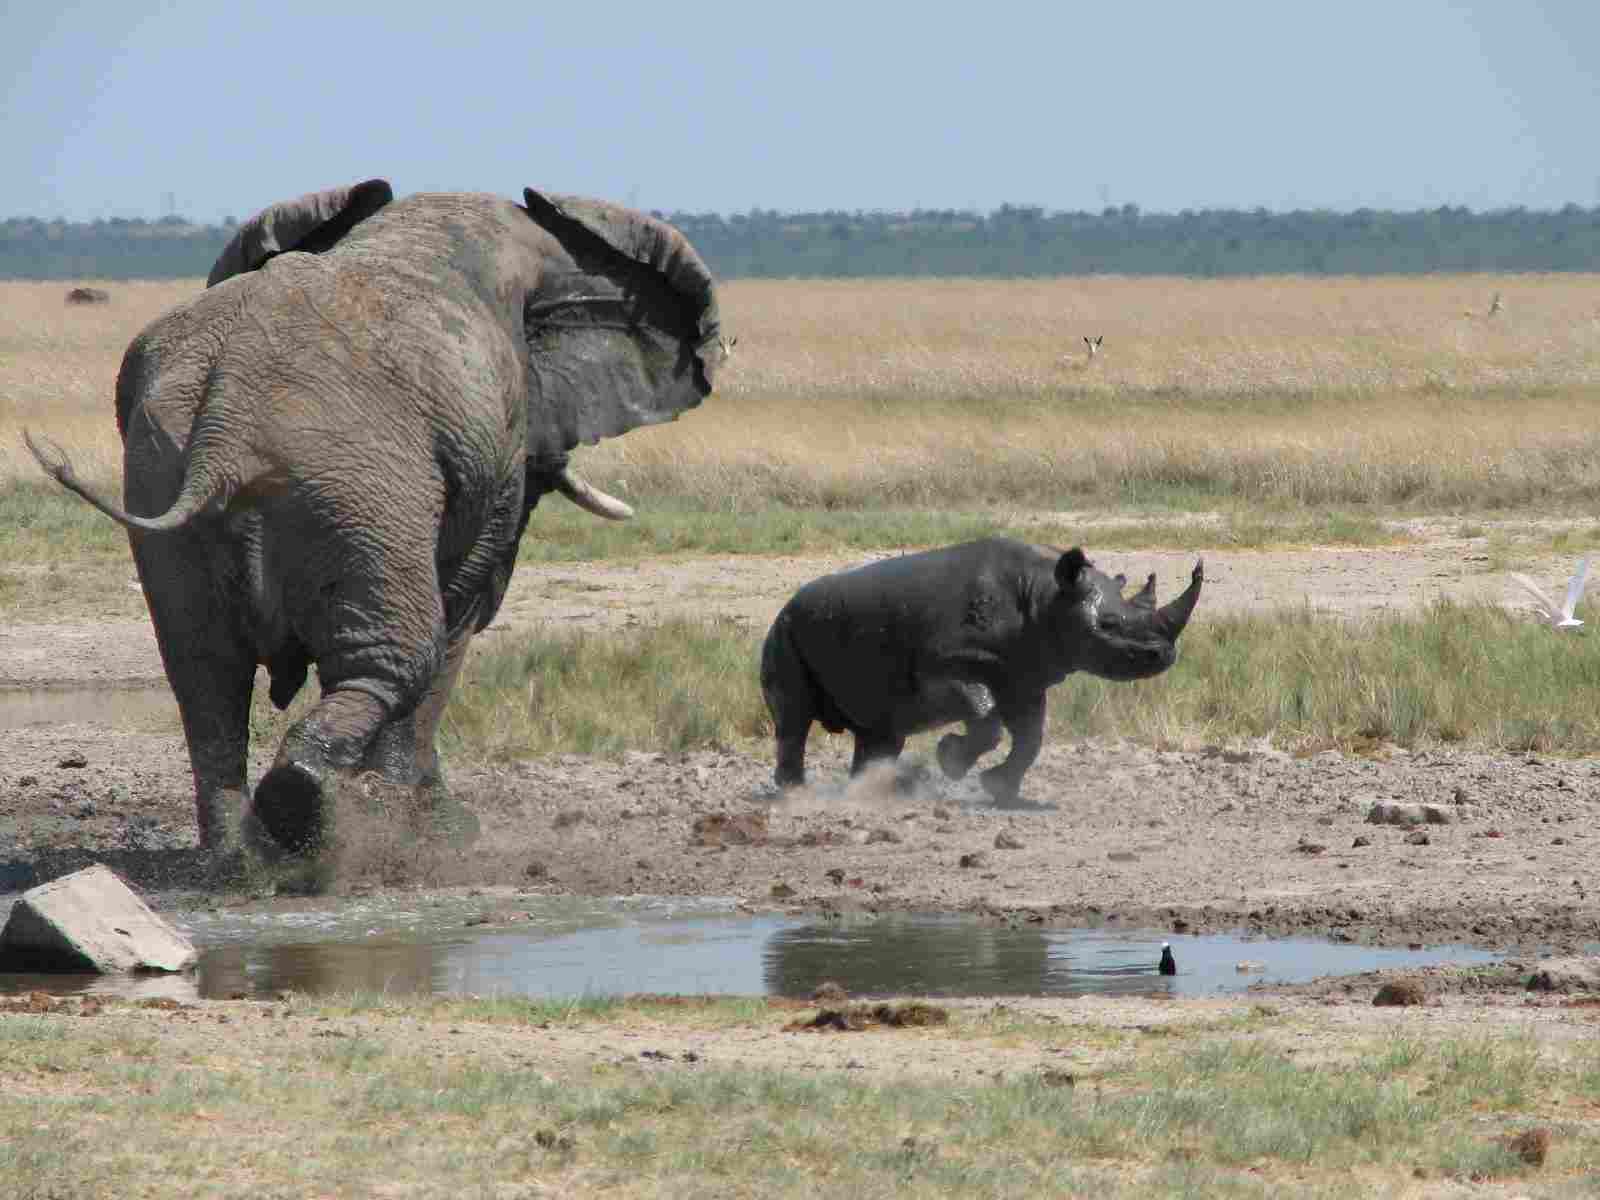 Rhino Vs Elephant: Elephants are Far Heavier and Larger Than Rhinos (Credit: Alastair Rae 2006, Uploaded Online 2007 .CC BY-SA 2.0.)